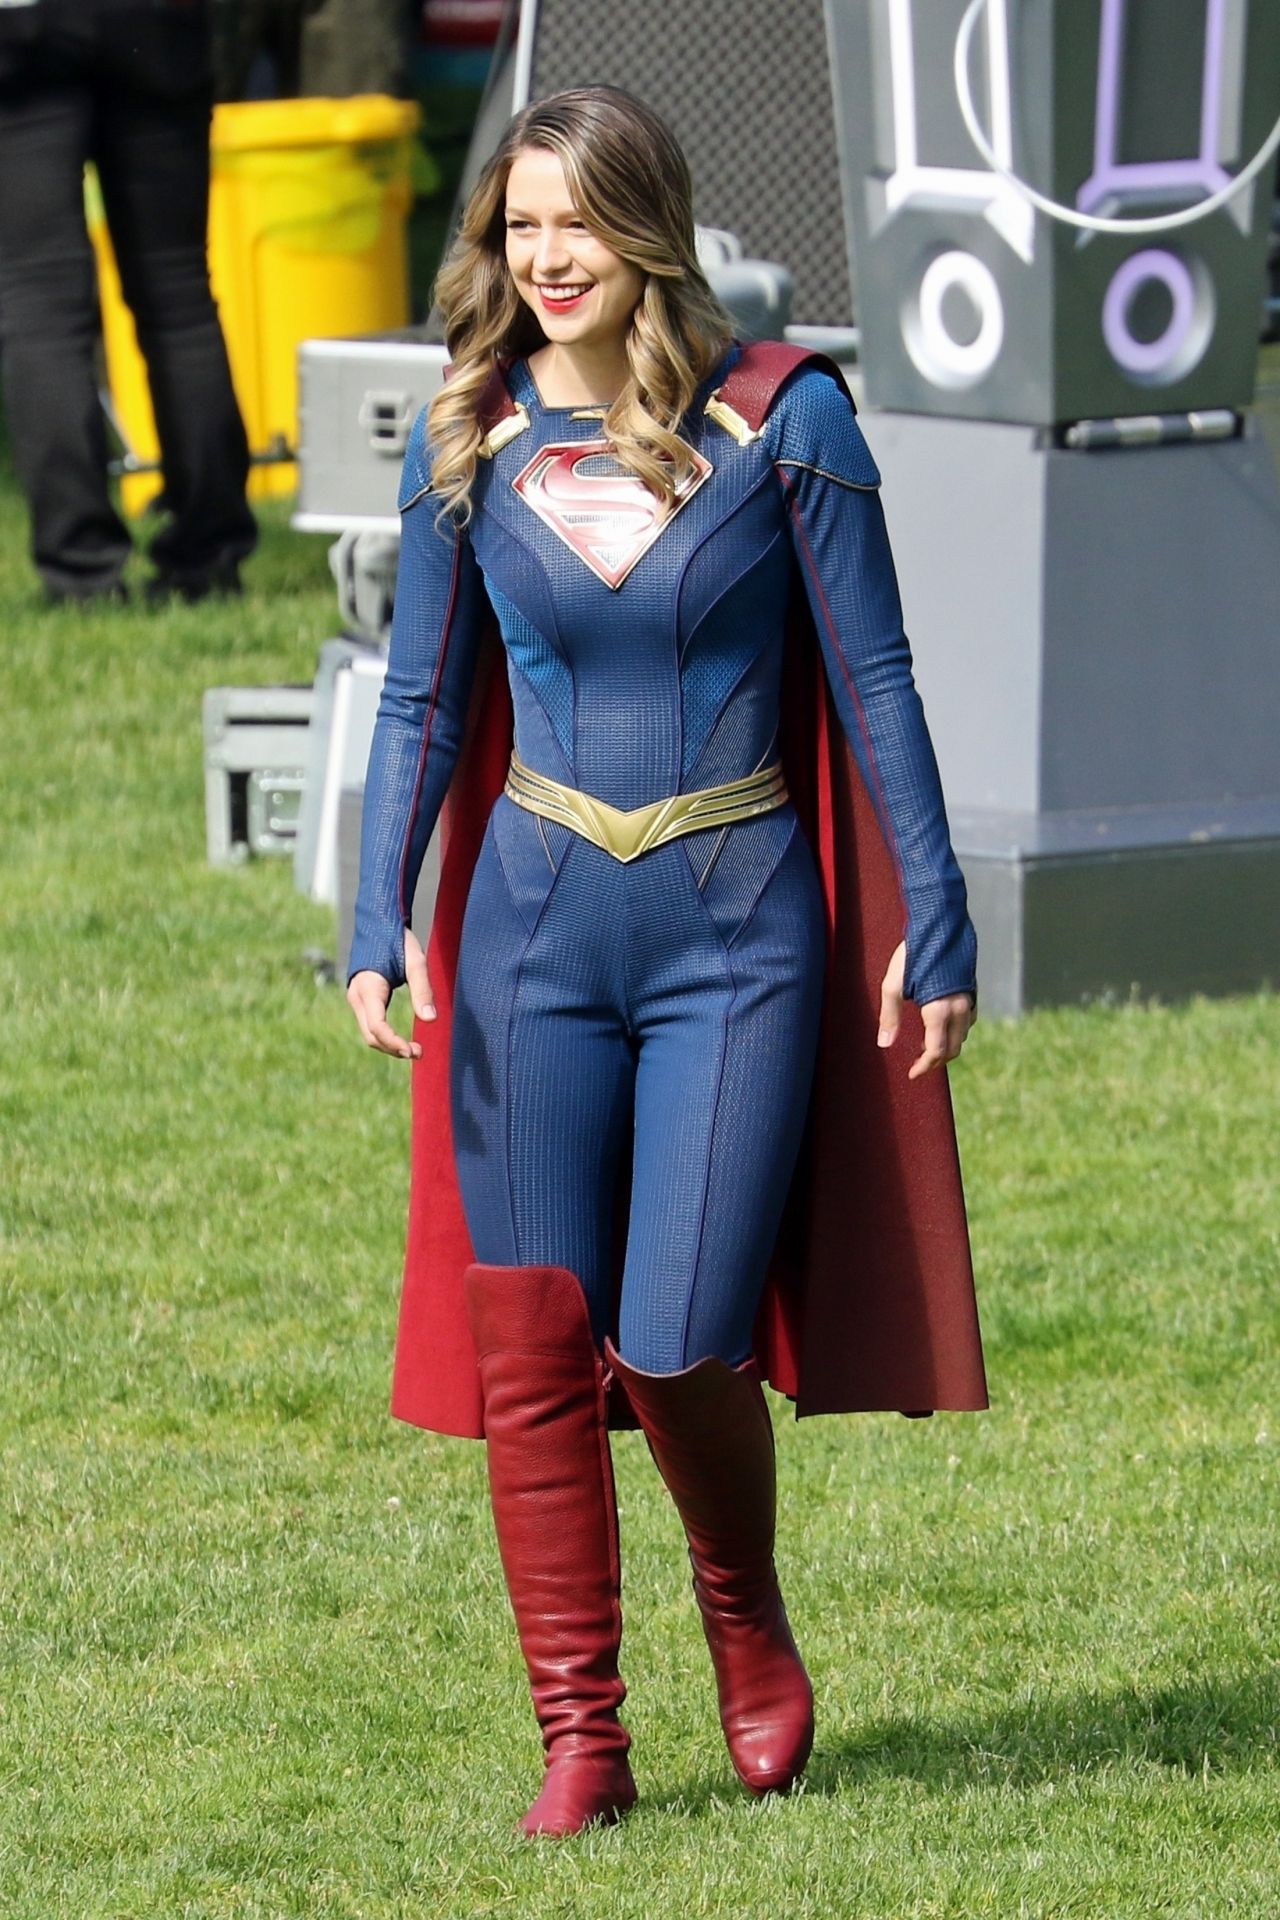 Melissa Benoist - Final season of "Supergirl" Filming Set in Vanc...